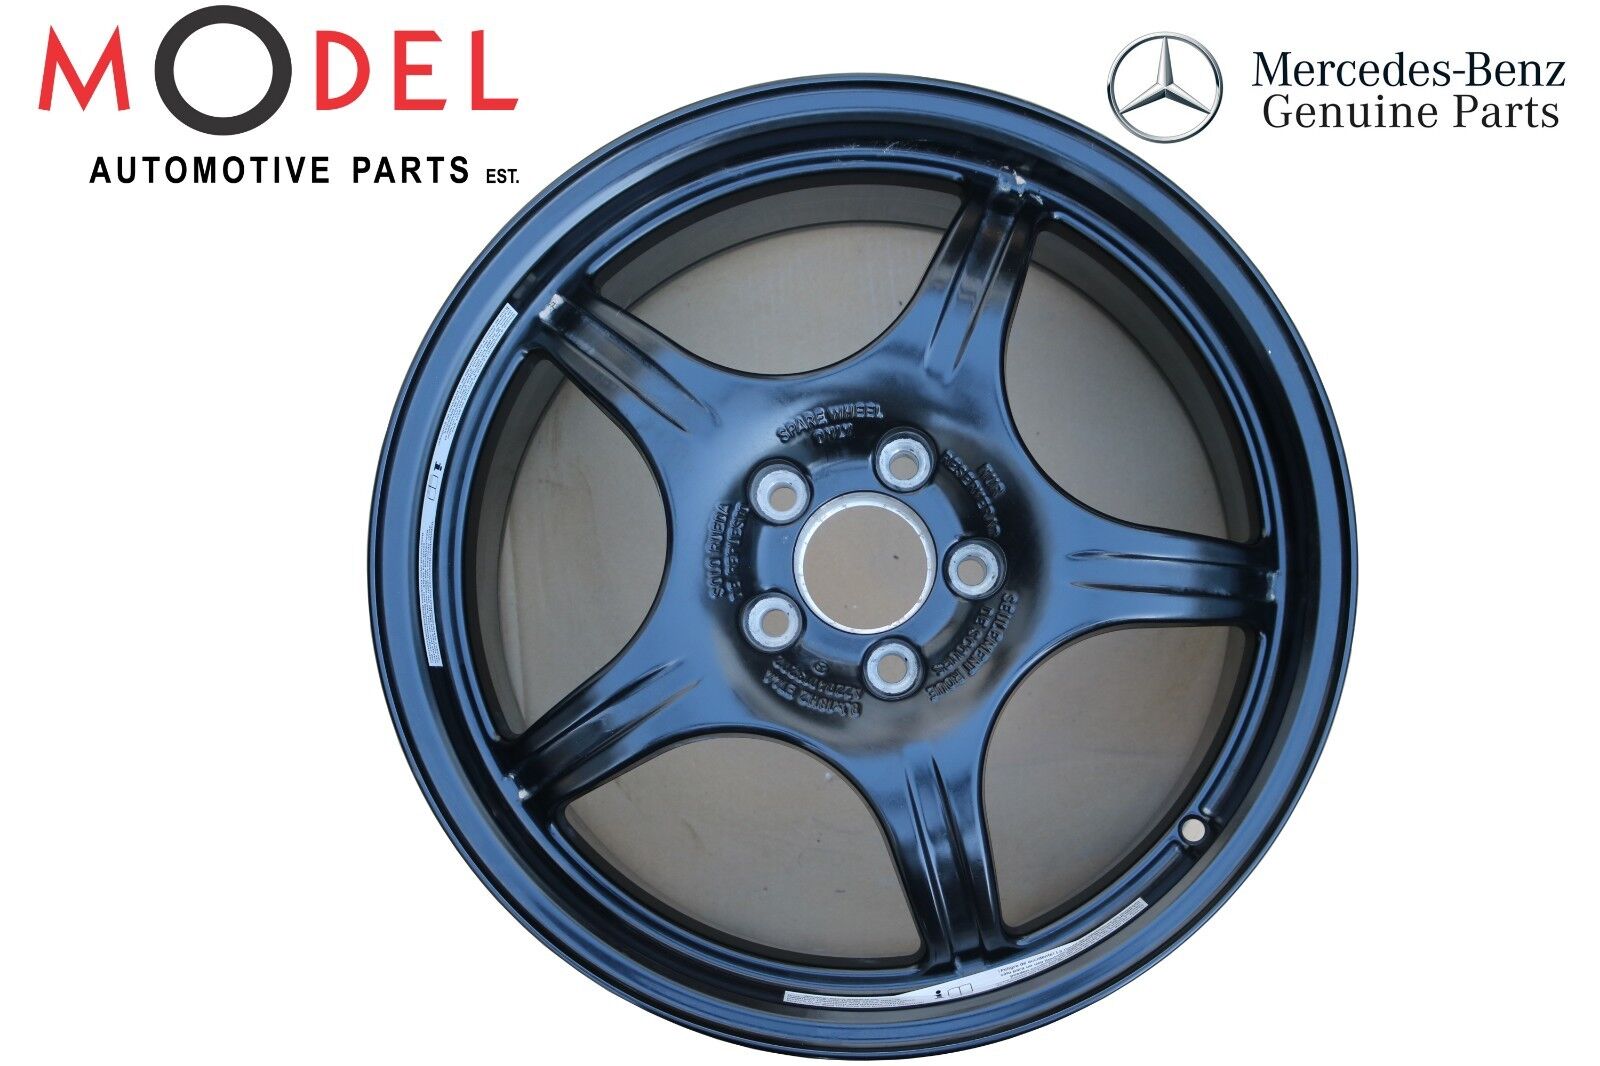 Mercedes-Benz Genuine Spare Wheel 2204001402 CL500 CL55 S55 S600 Original NEW